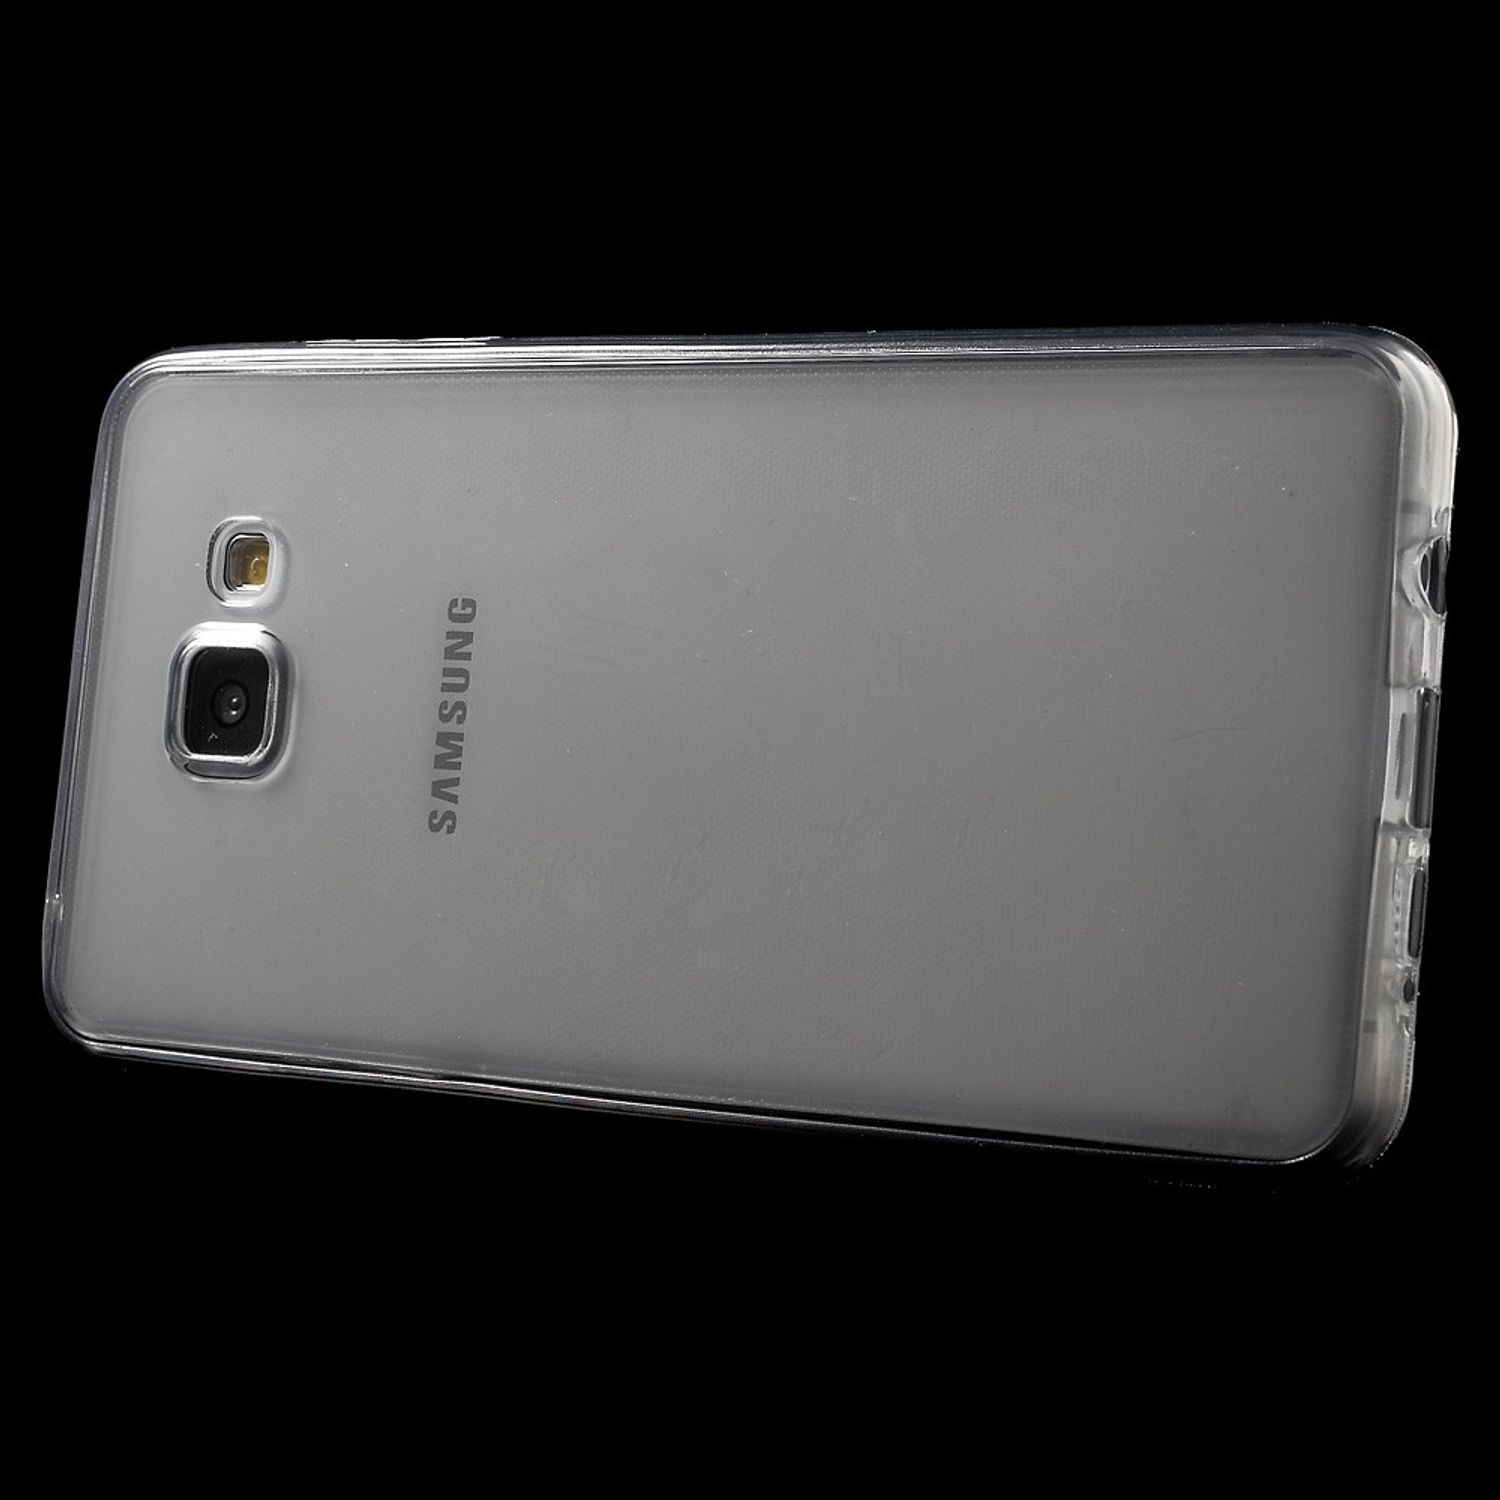 Backcover, A3 (2016), Transparent Galaxy KÖNIG Samsung, Handyhülle, DESIGN